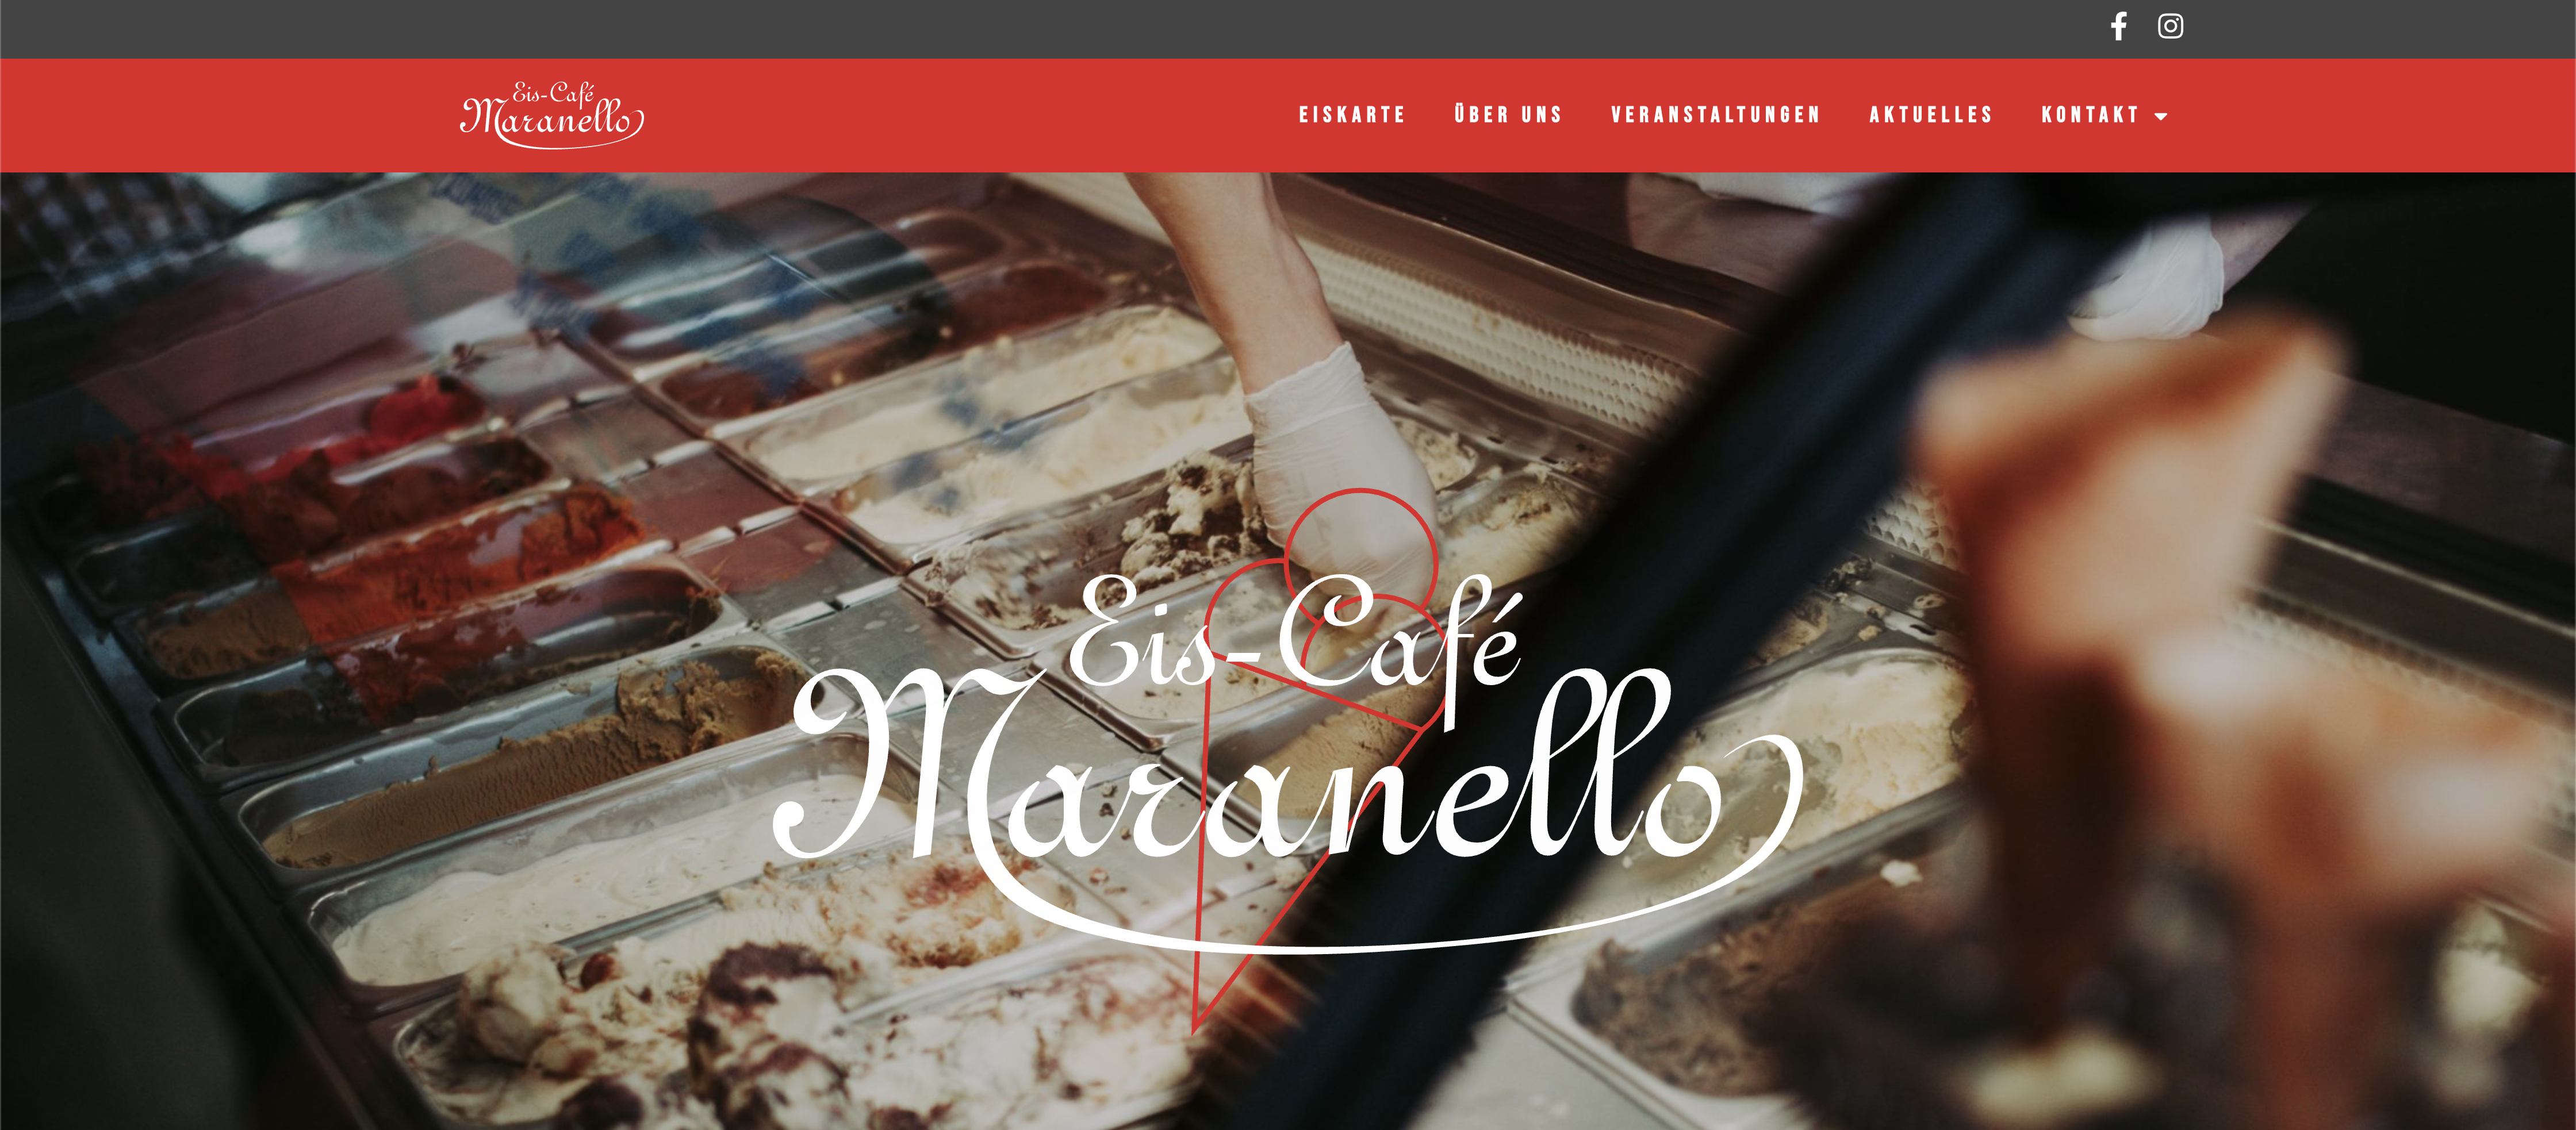 Webdesign – Eiscafé Maranello